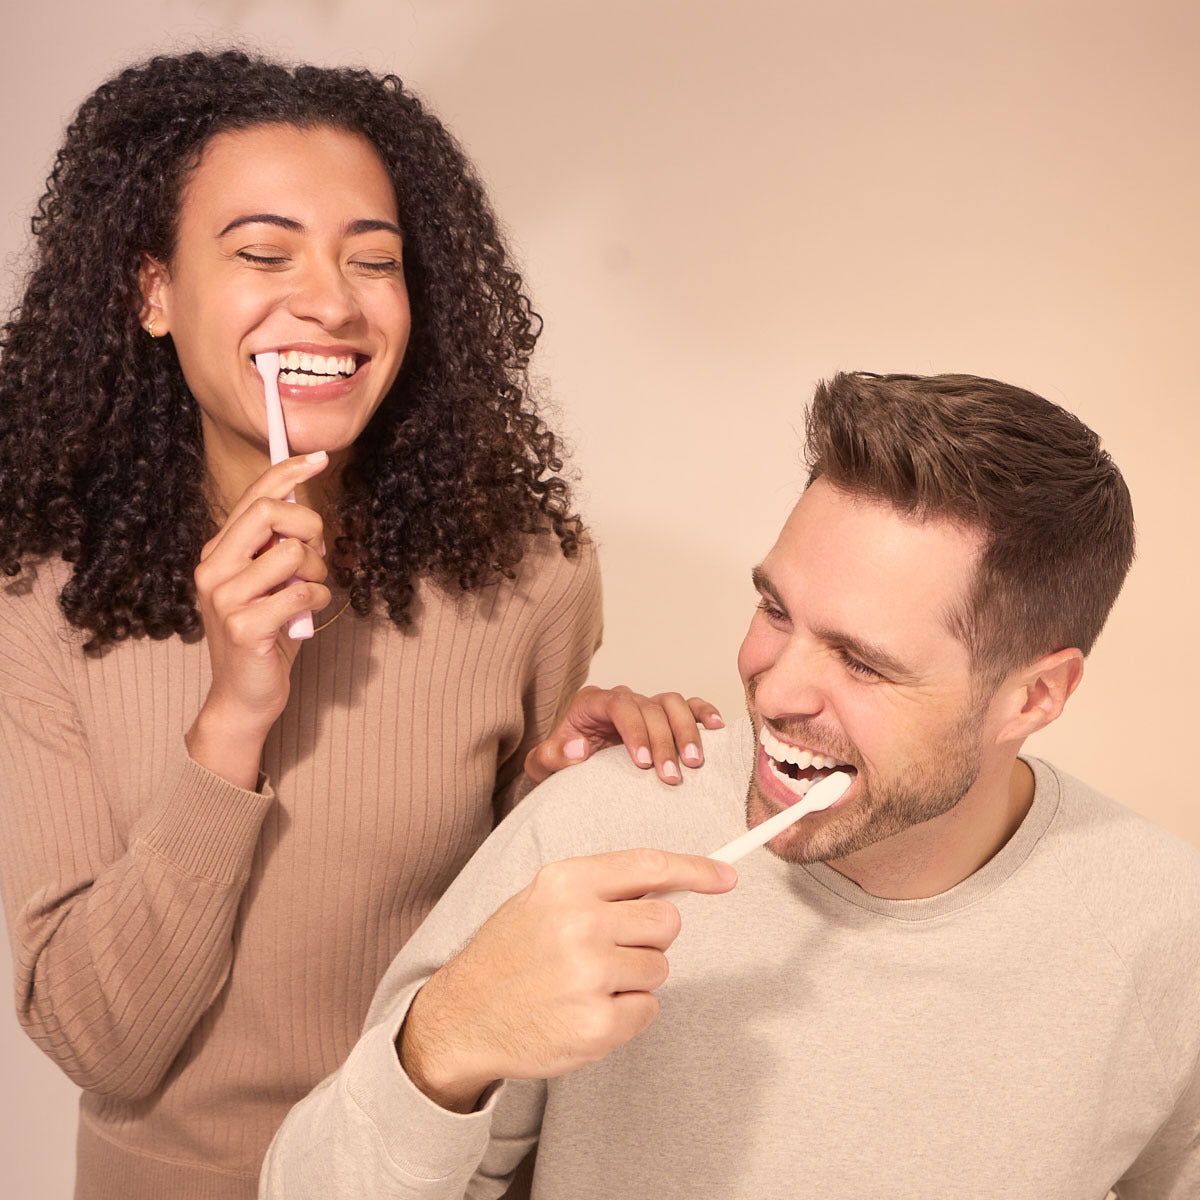 Woman and man brushing their teeth